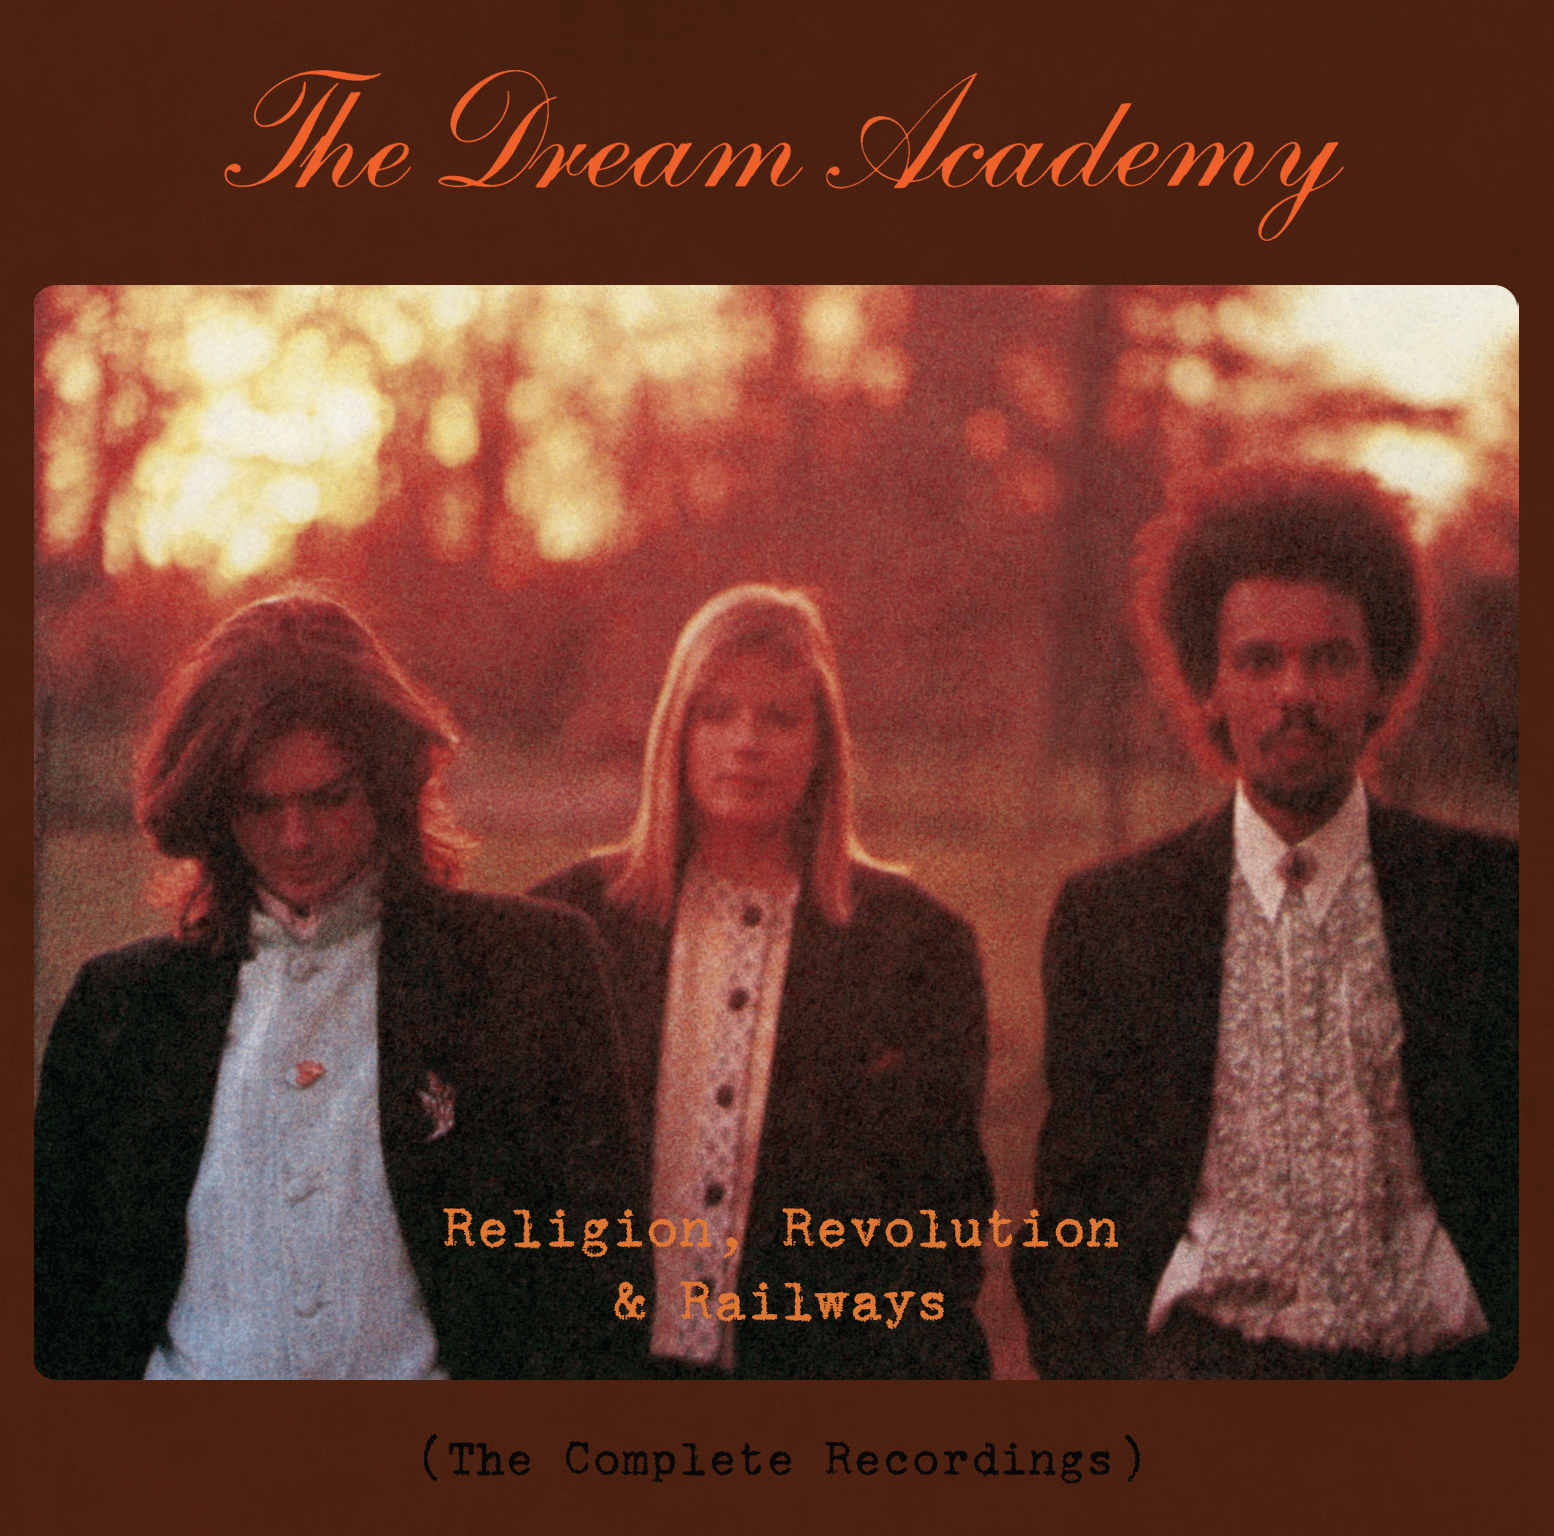 THE DREAM ACADEMY "Religion, Revolution & Railways ( 7CD Box ) "